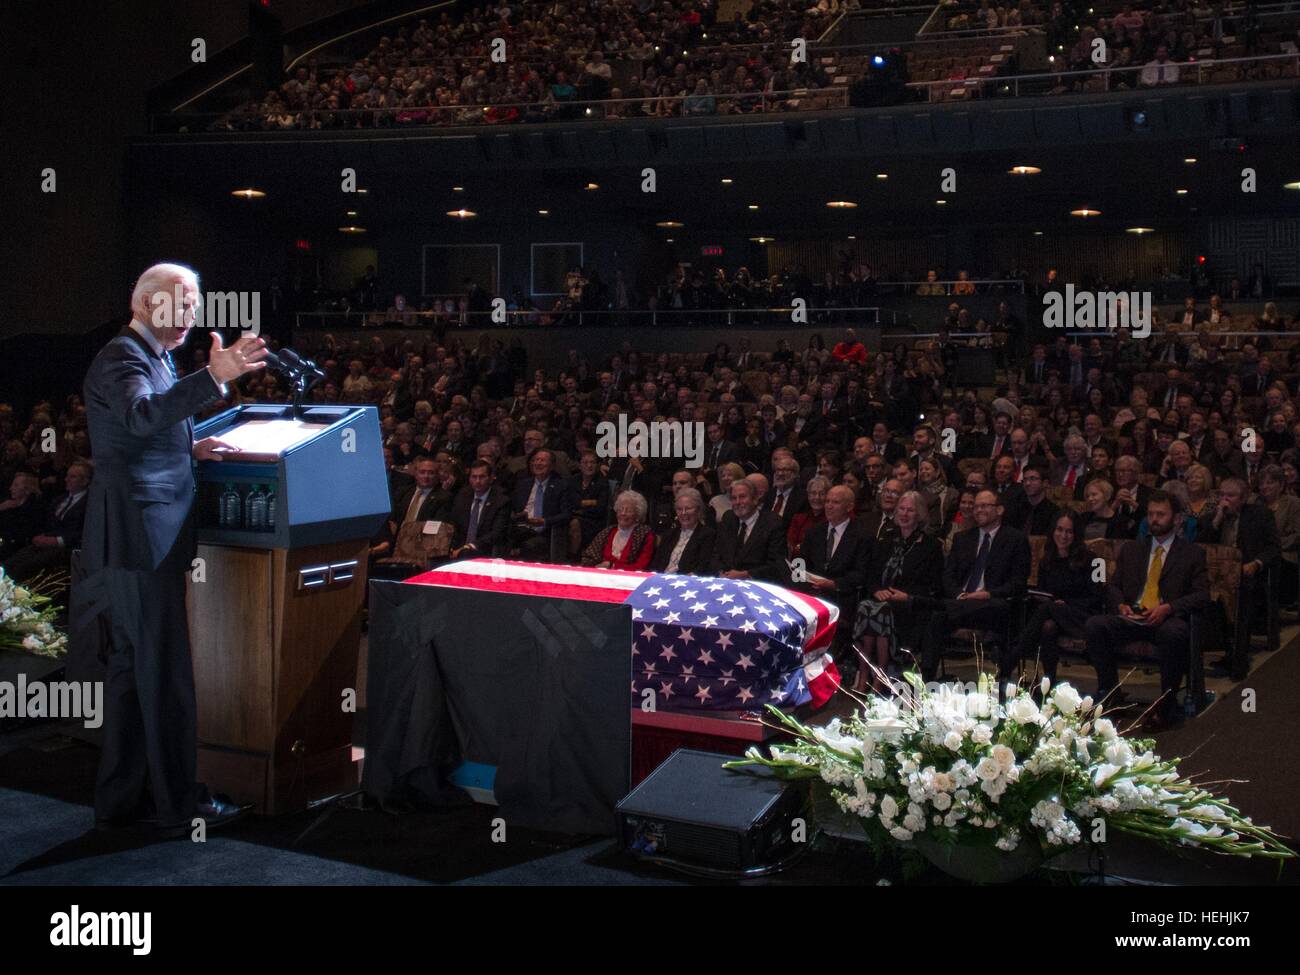 U.S. Vice President Joe Biden speaks at a memorial service celebrating the life of former NASA astronaut and U.S. Senator John Glenn at the Ohio State University Mershon Auditorium December 17, 2016 in Columbus, Ohio. Stock Photo